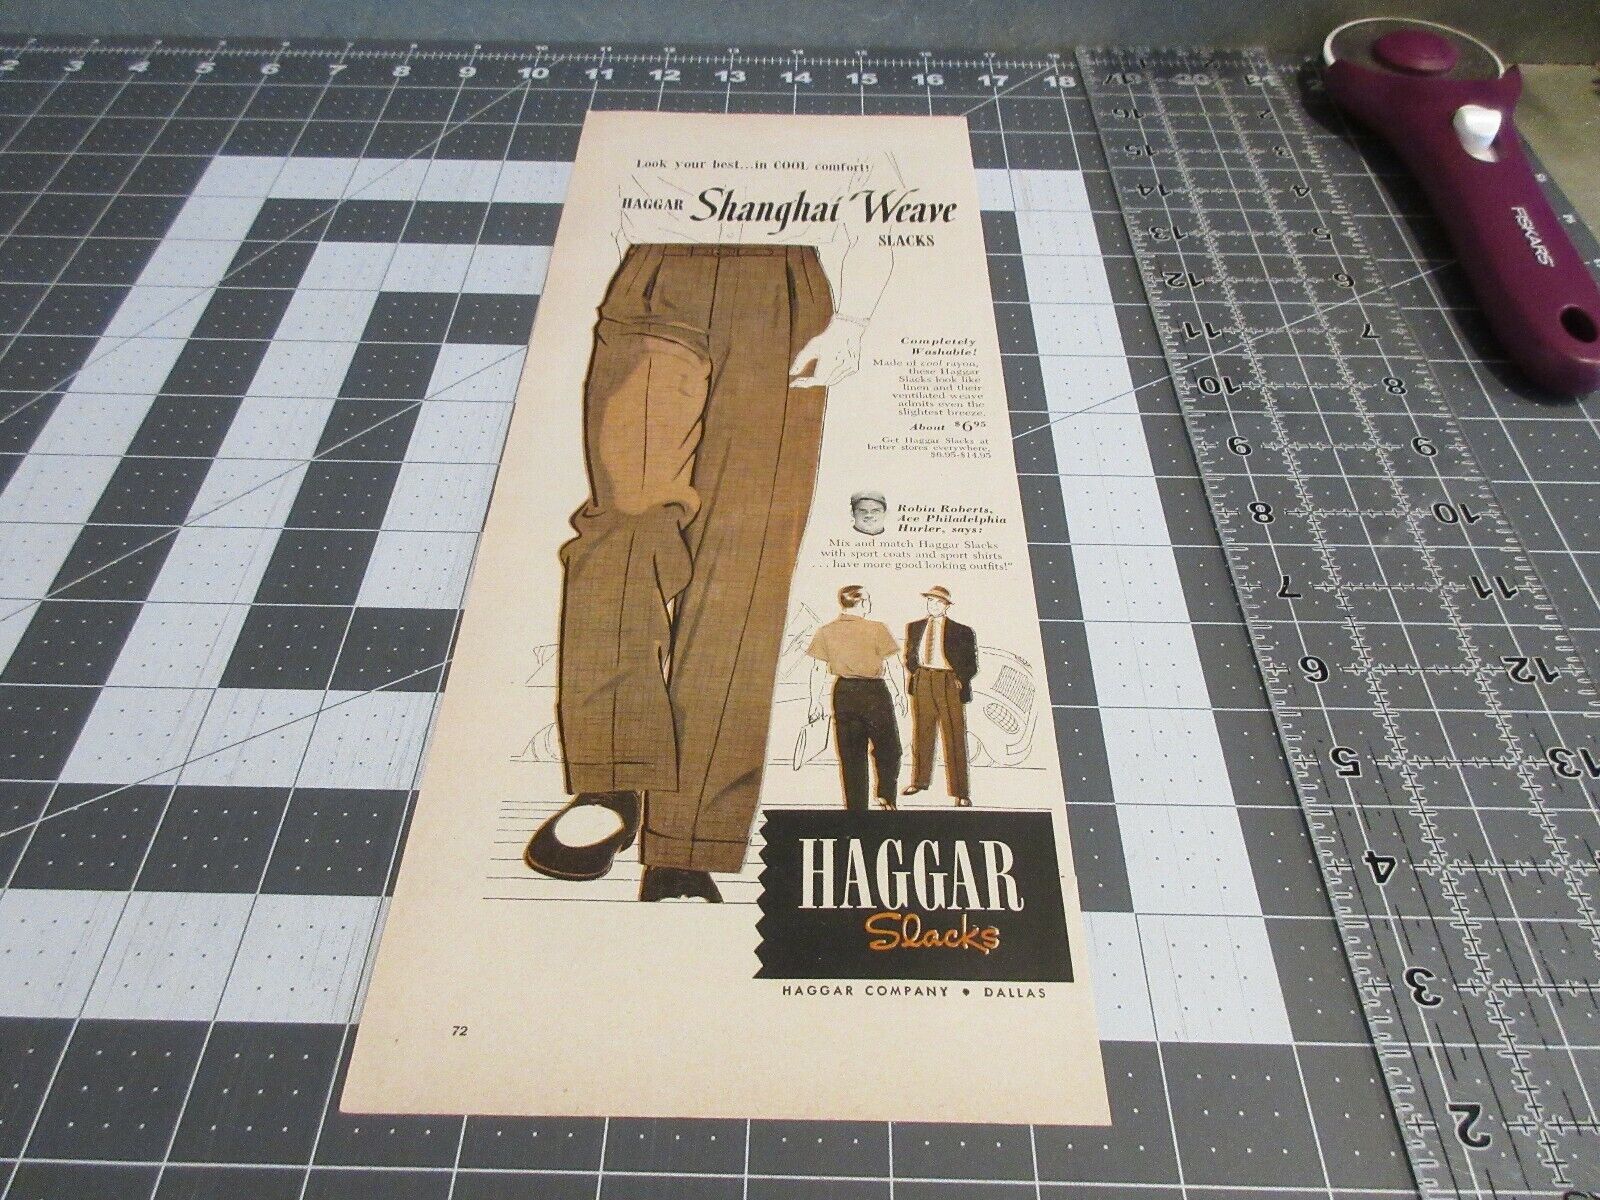 1955 Haggar Slacks PRINT AD Shanghai Weave Dress Pants, (Robin Roberts Phillies)